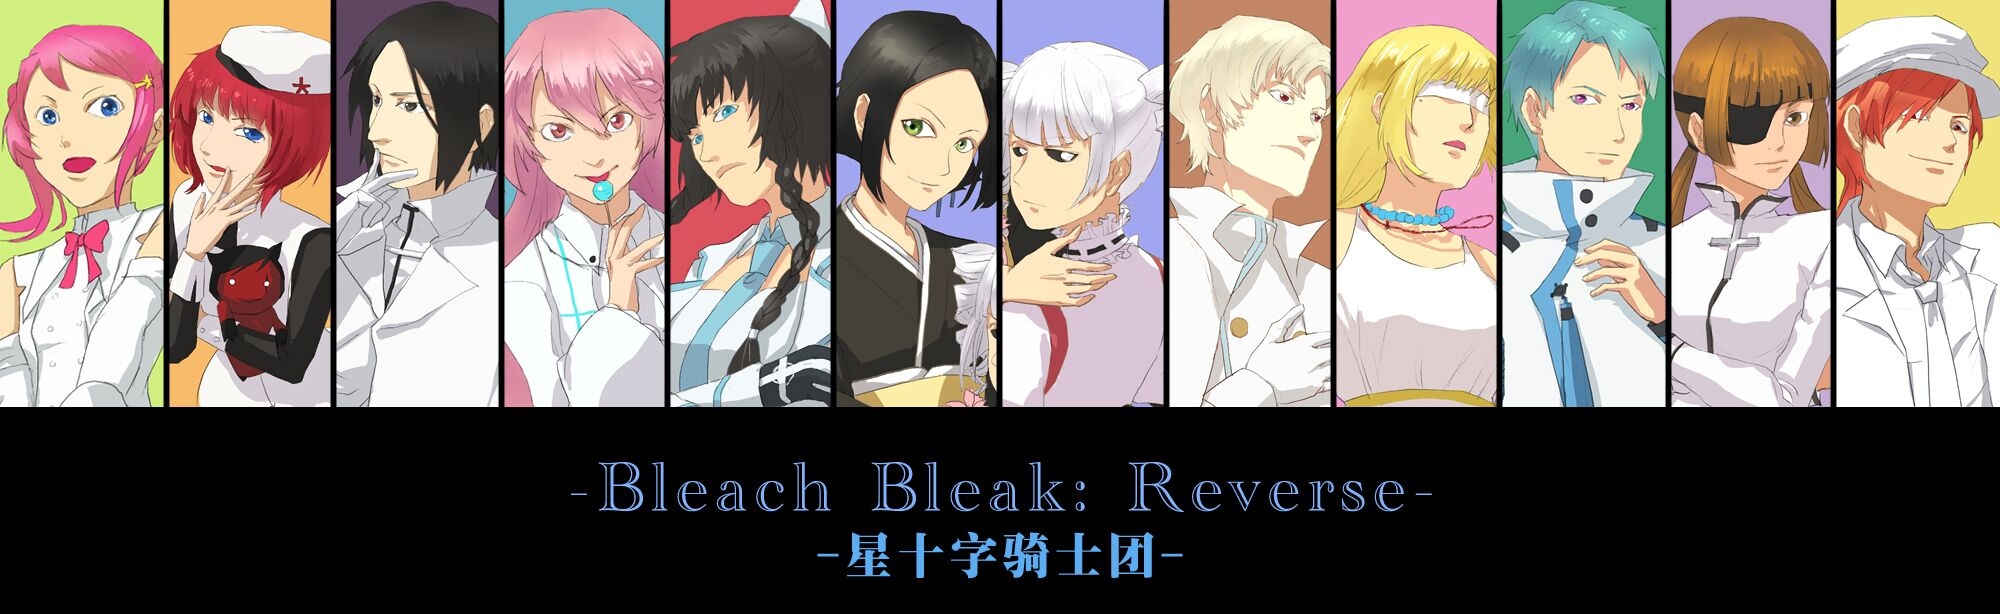 Bleach Bleak: Reverse